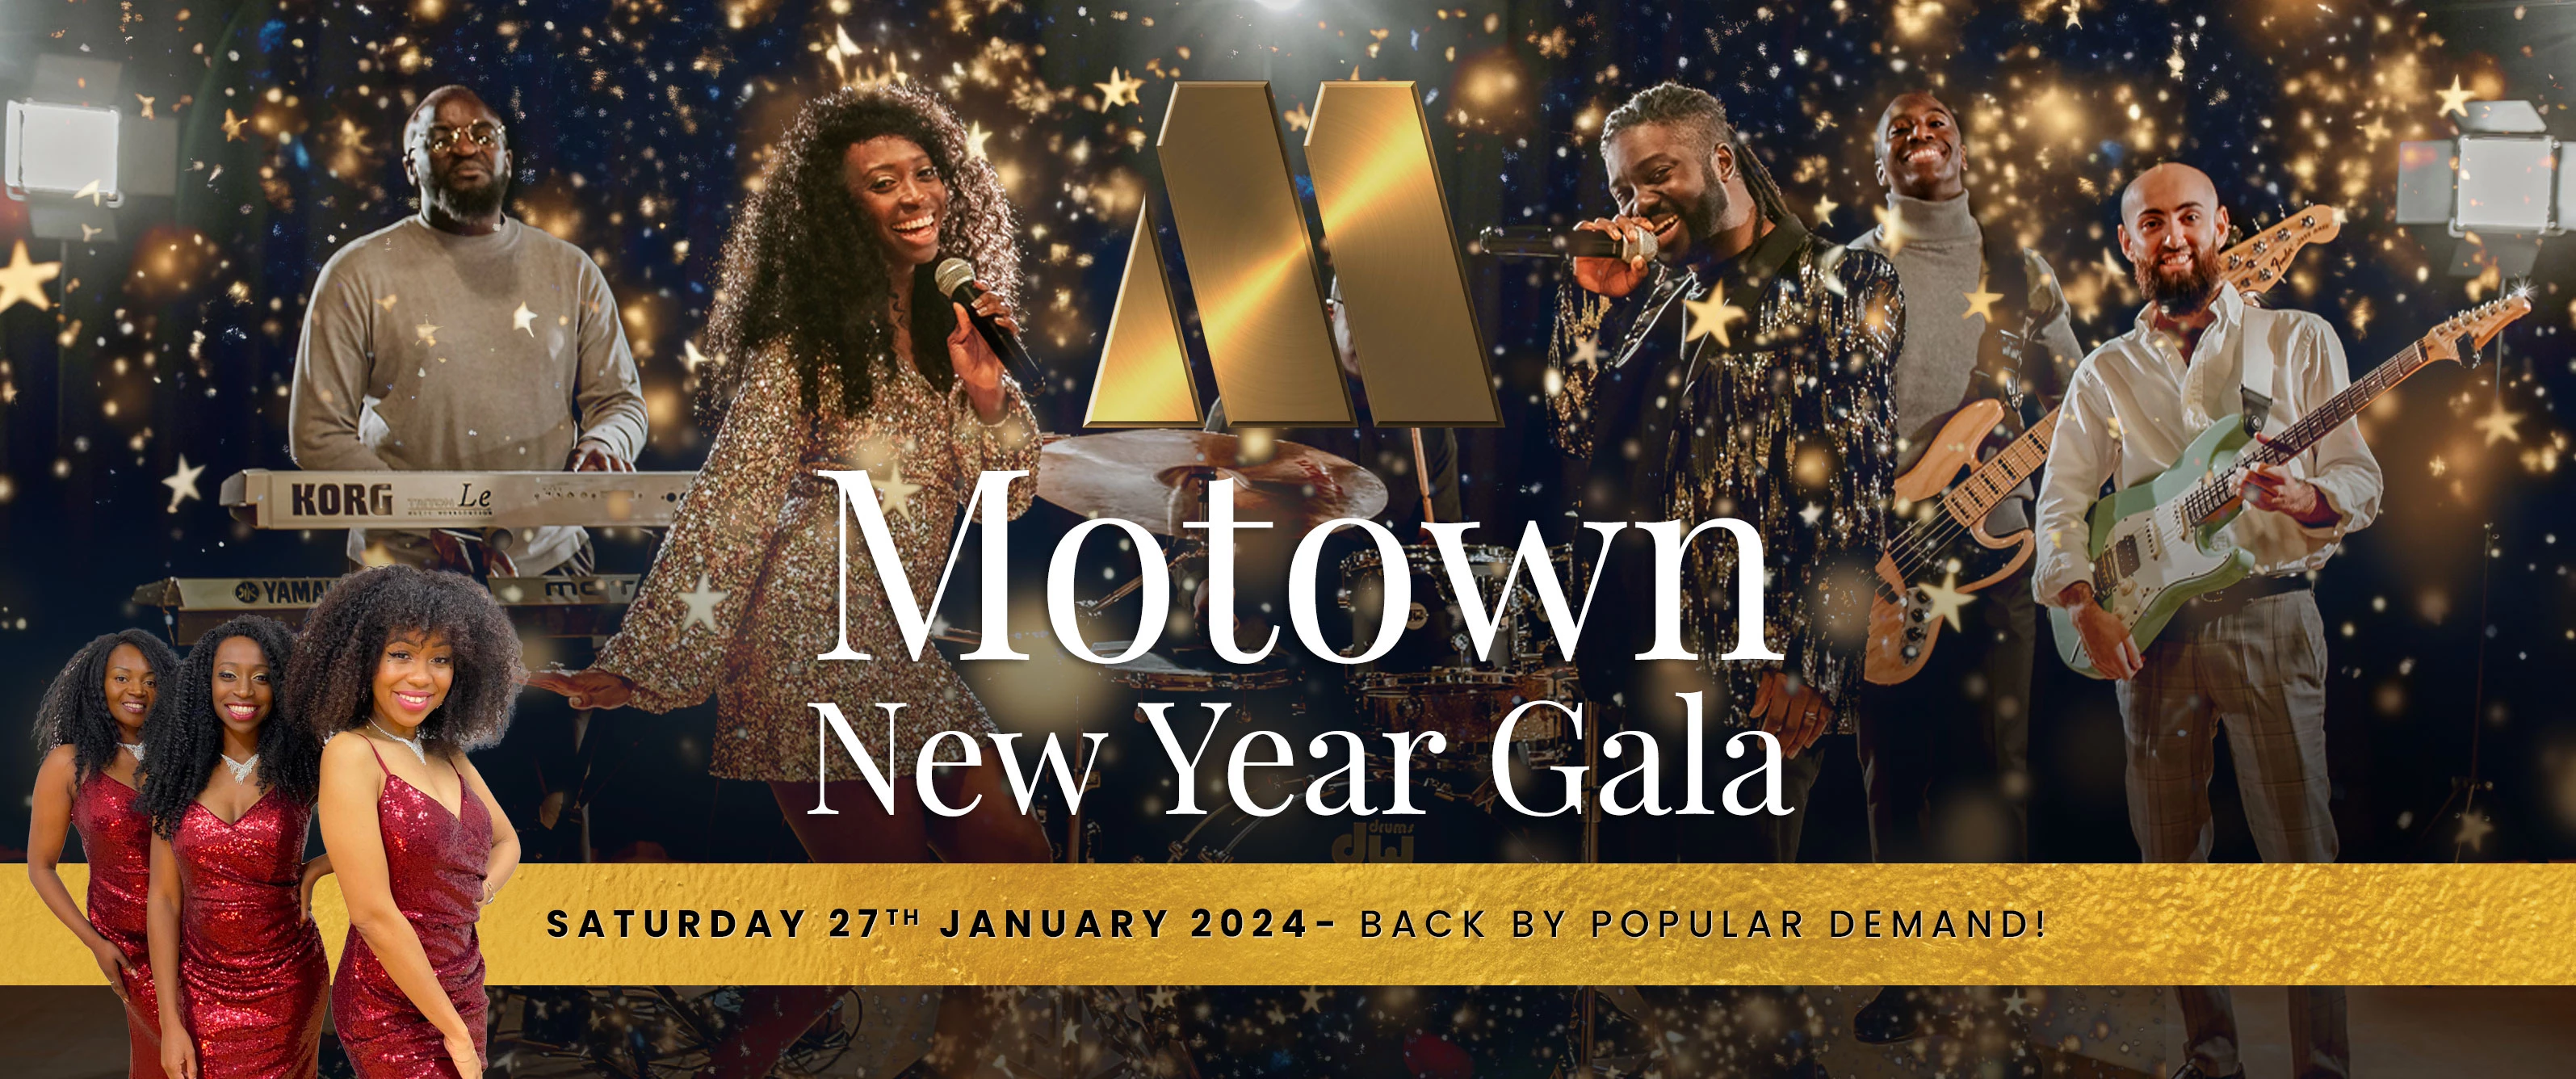 The Motown NEW YEAR Gala